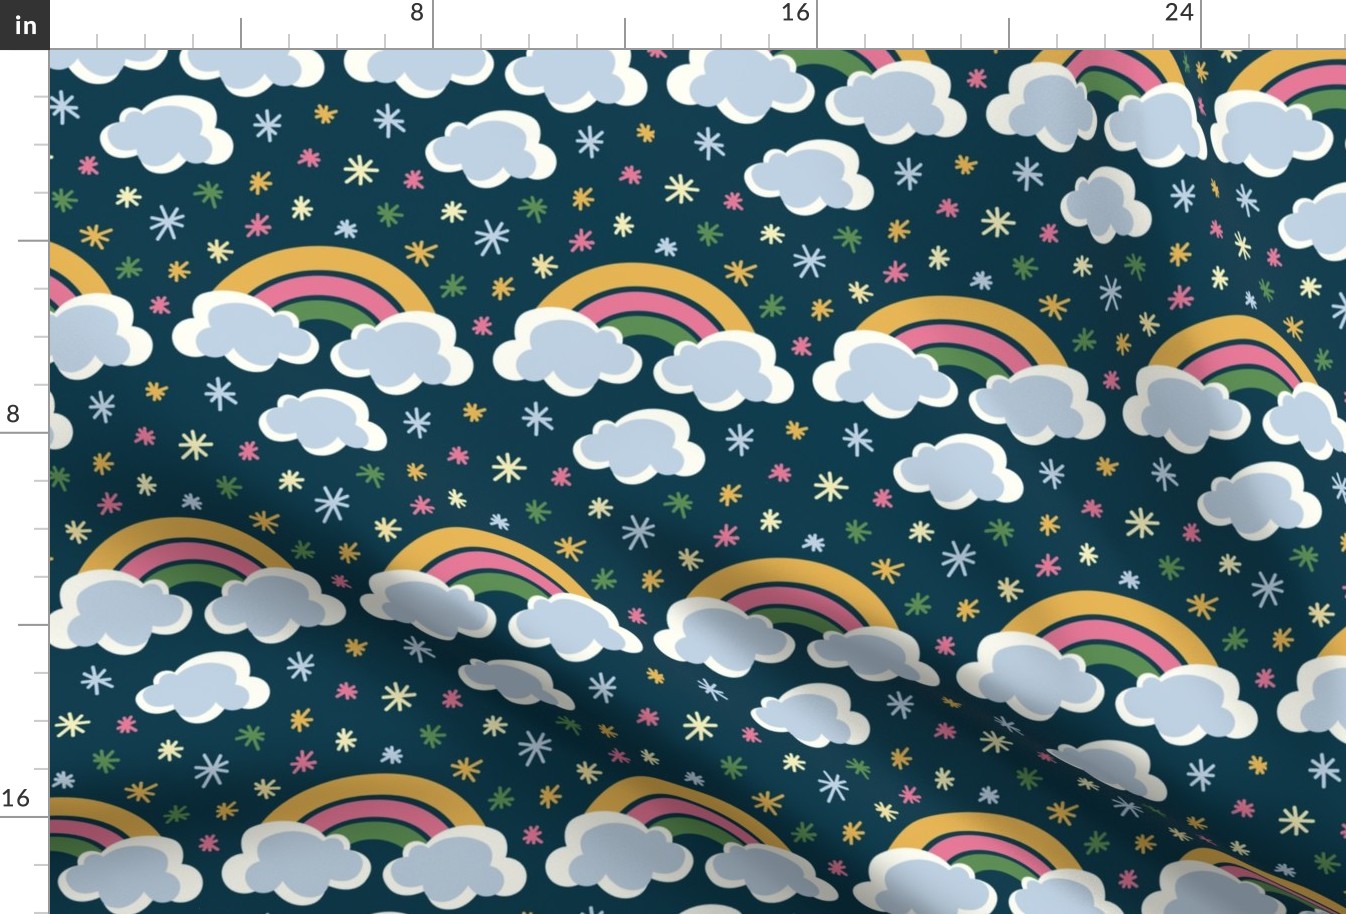 Rainbow, Snow, Clouds - Сute Baby Design - Prussian Blue BG